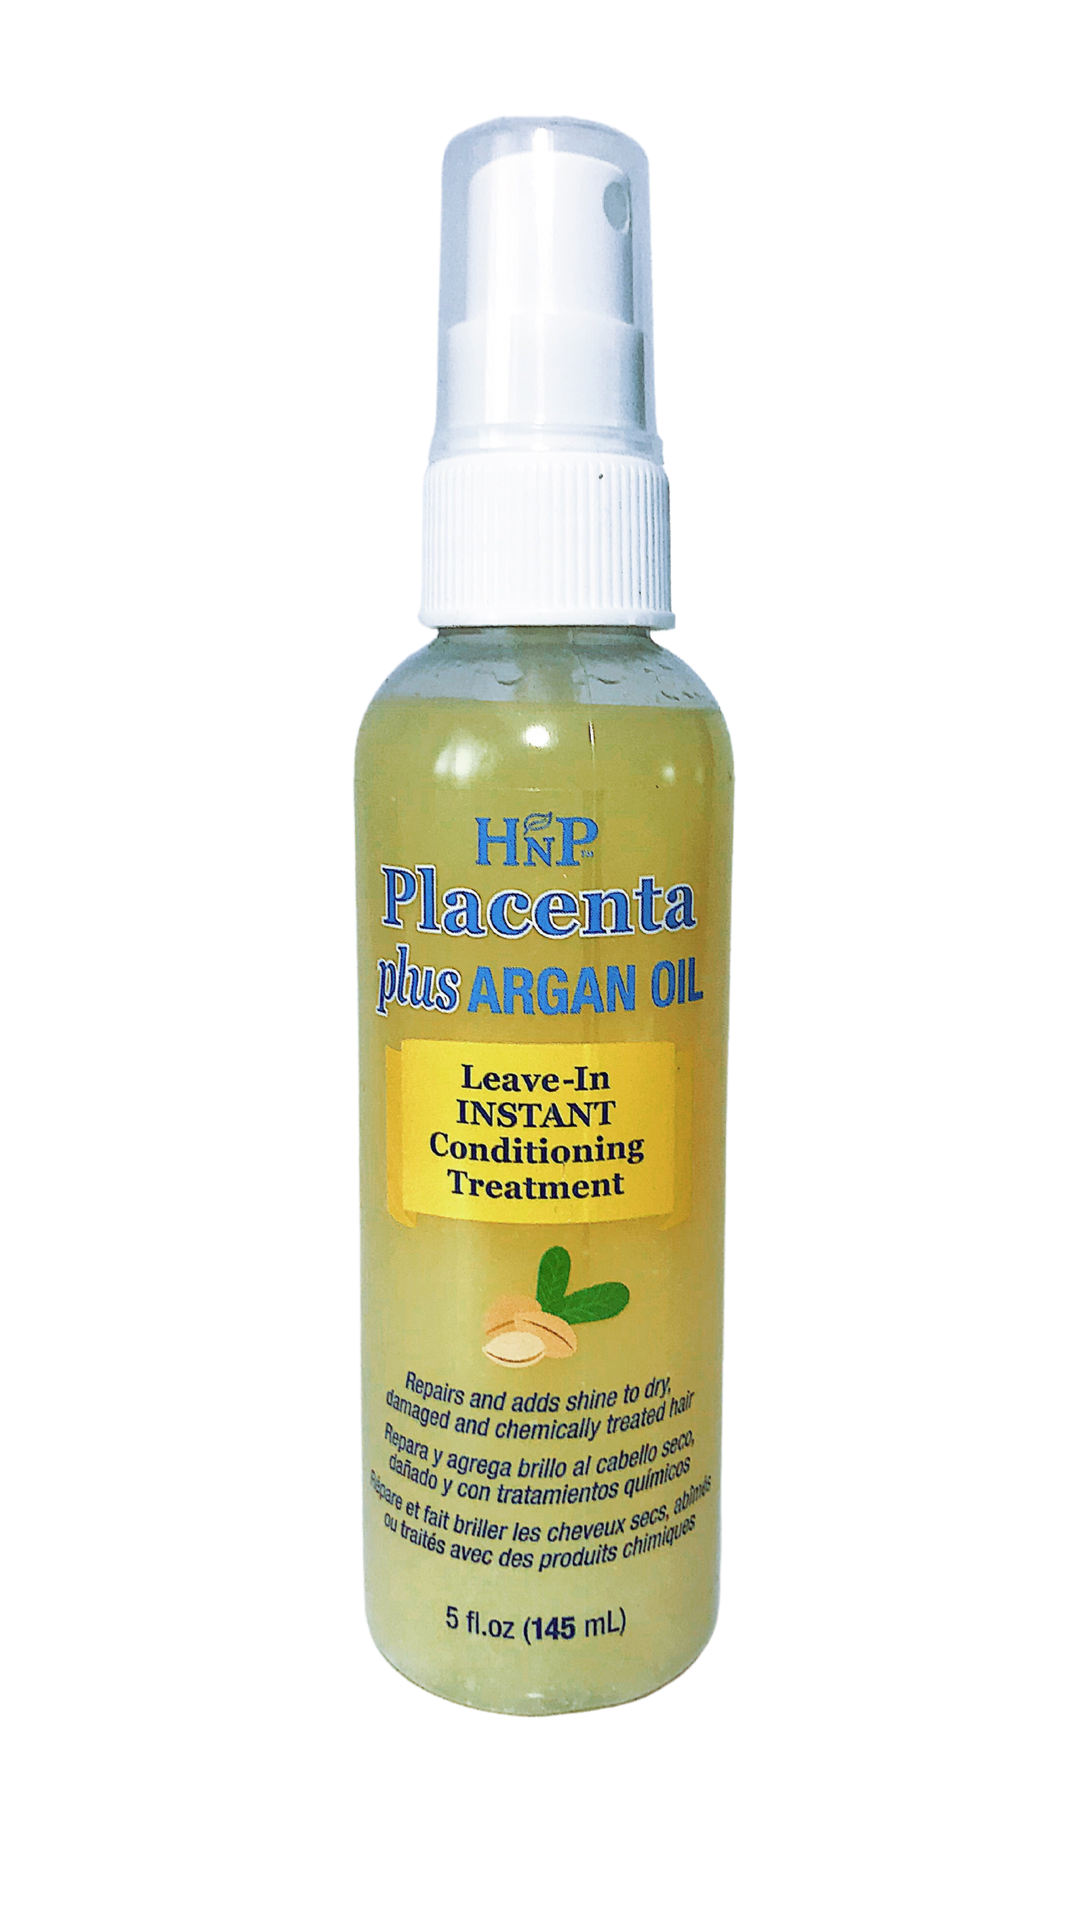 HnP-Placenta-Plus-Argan-Oil-Leave-In-Instant-Conditioning-Treatment.jpg